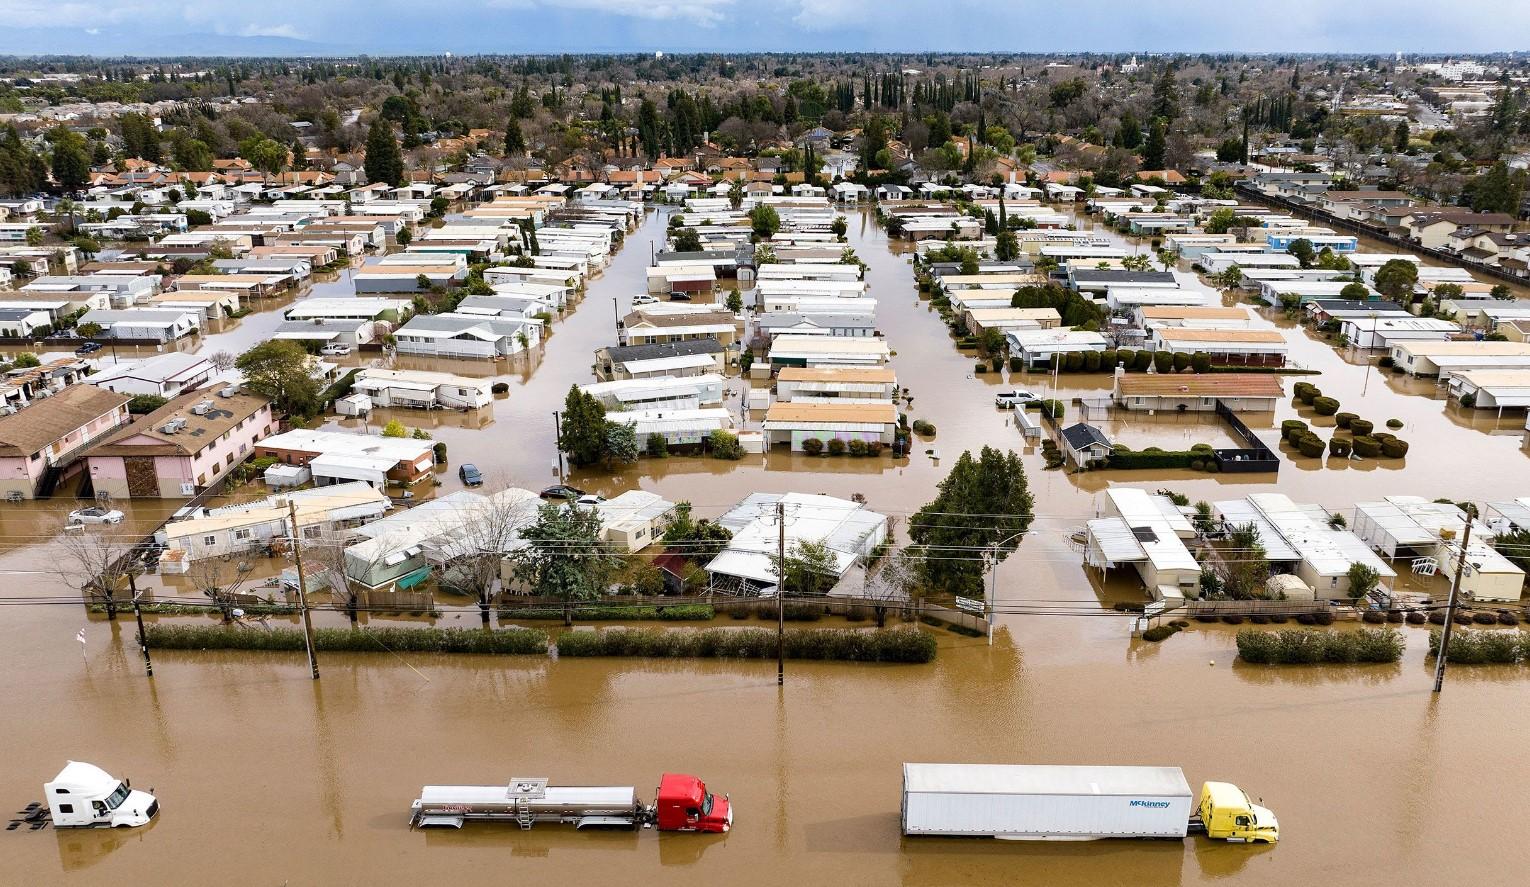 Poplave u Kaliforniji - Avaz